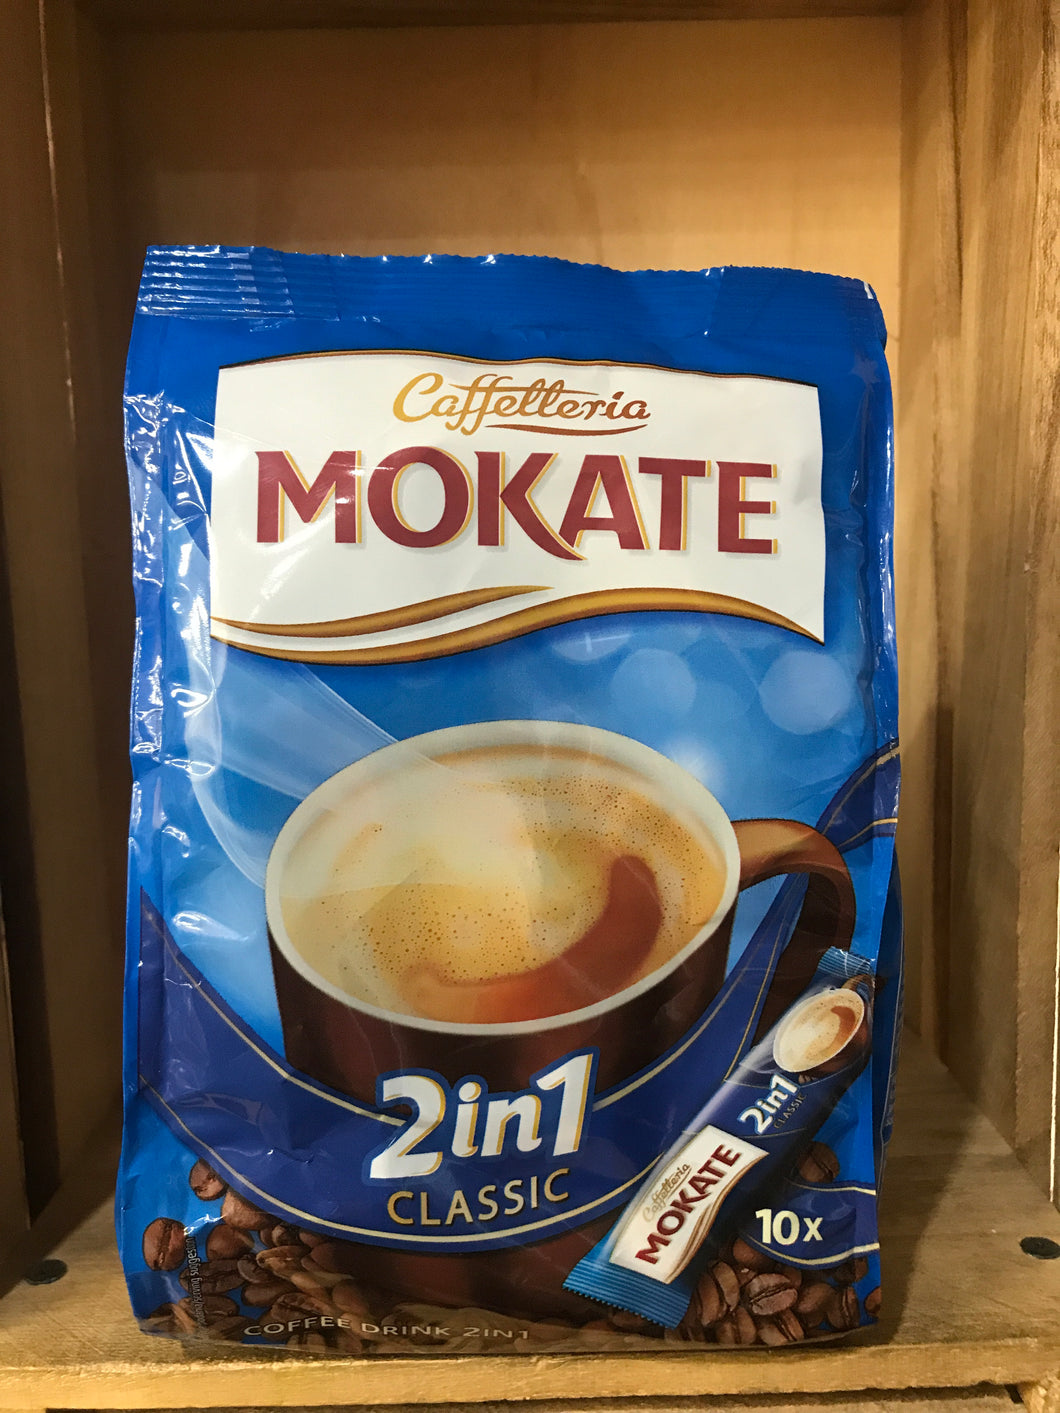 10x Caffetteria Mokate 2in1 Classic Coffee (10x14g)